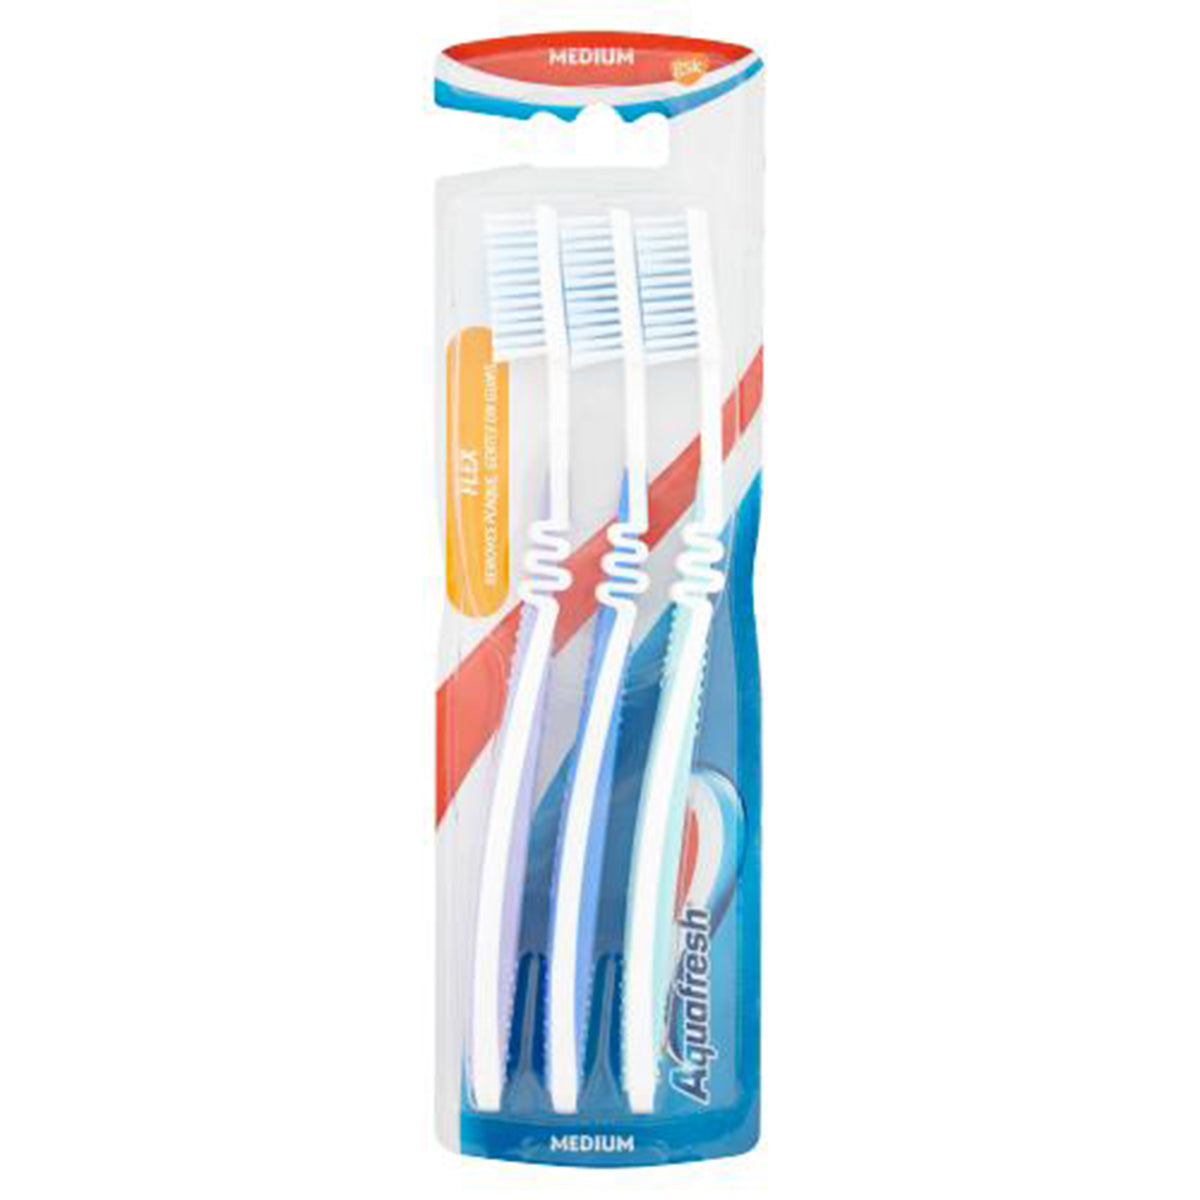 Aquafresh Flex Toothbrush Medium Size - Pack of 3 - Continental Food Store